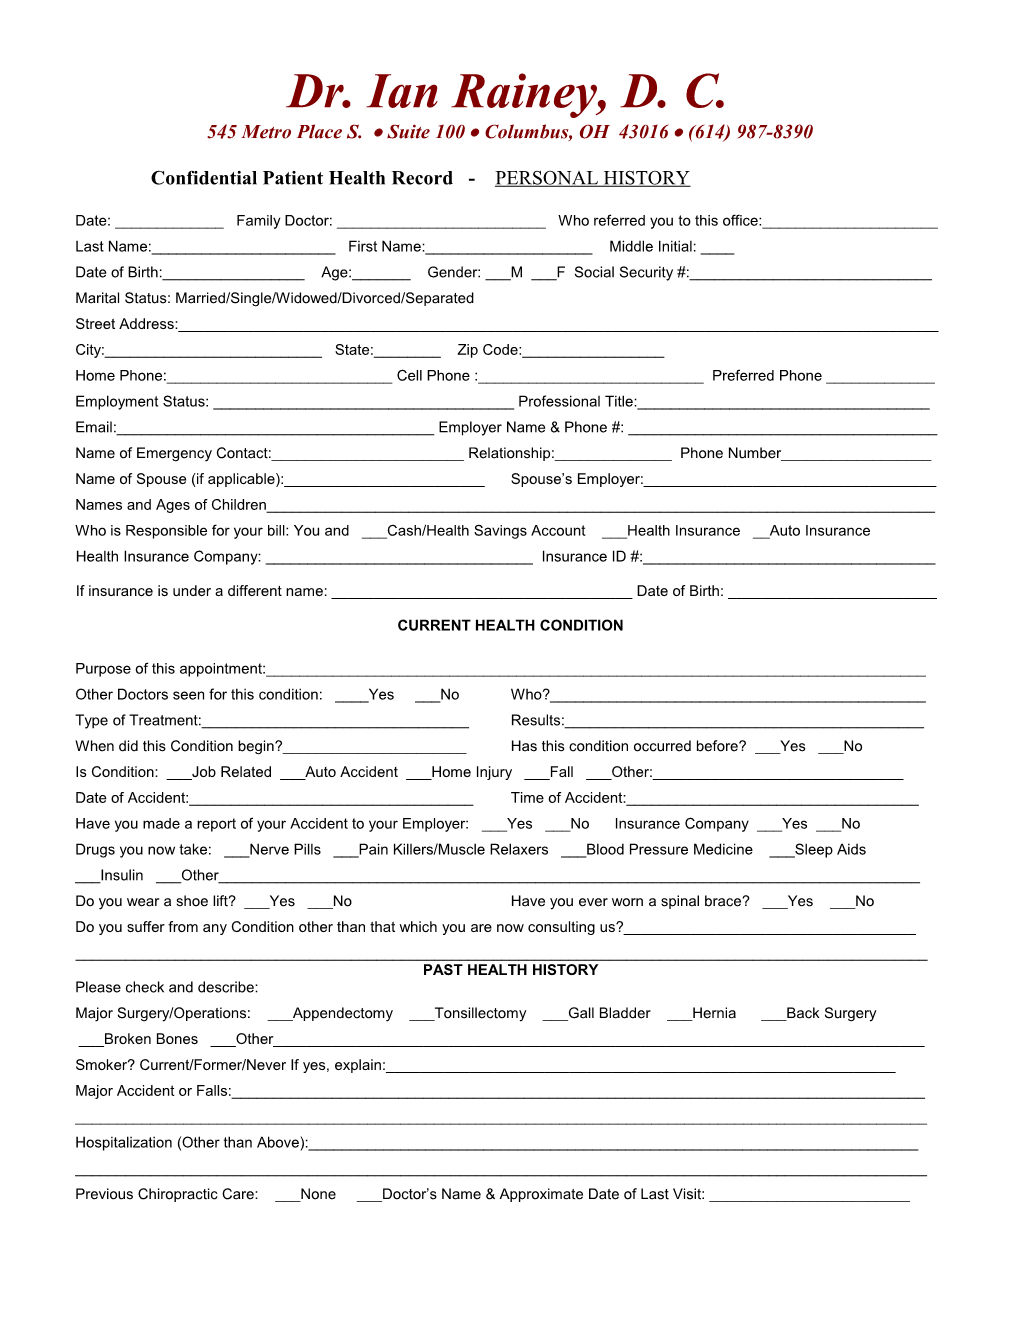 Confidential Patient Health Record